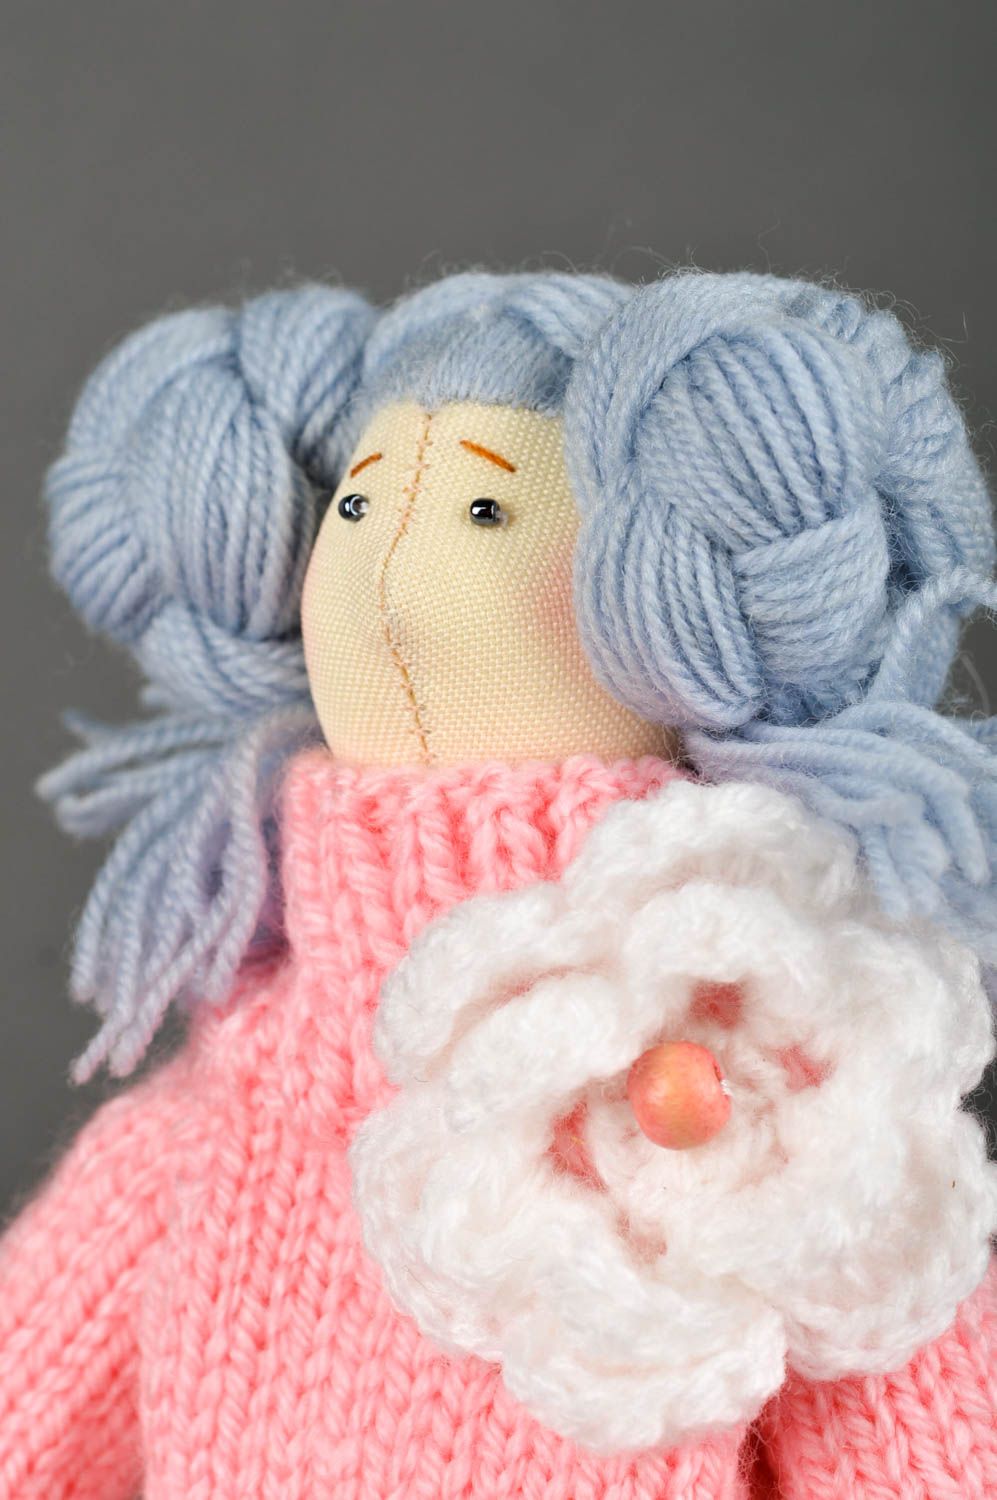 Rag doll handmade fabric toy textile toy for children nursery decor ideas photo 4